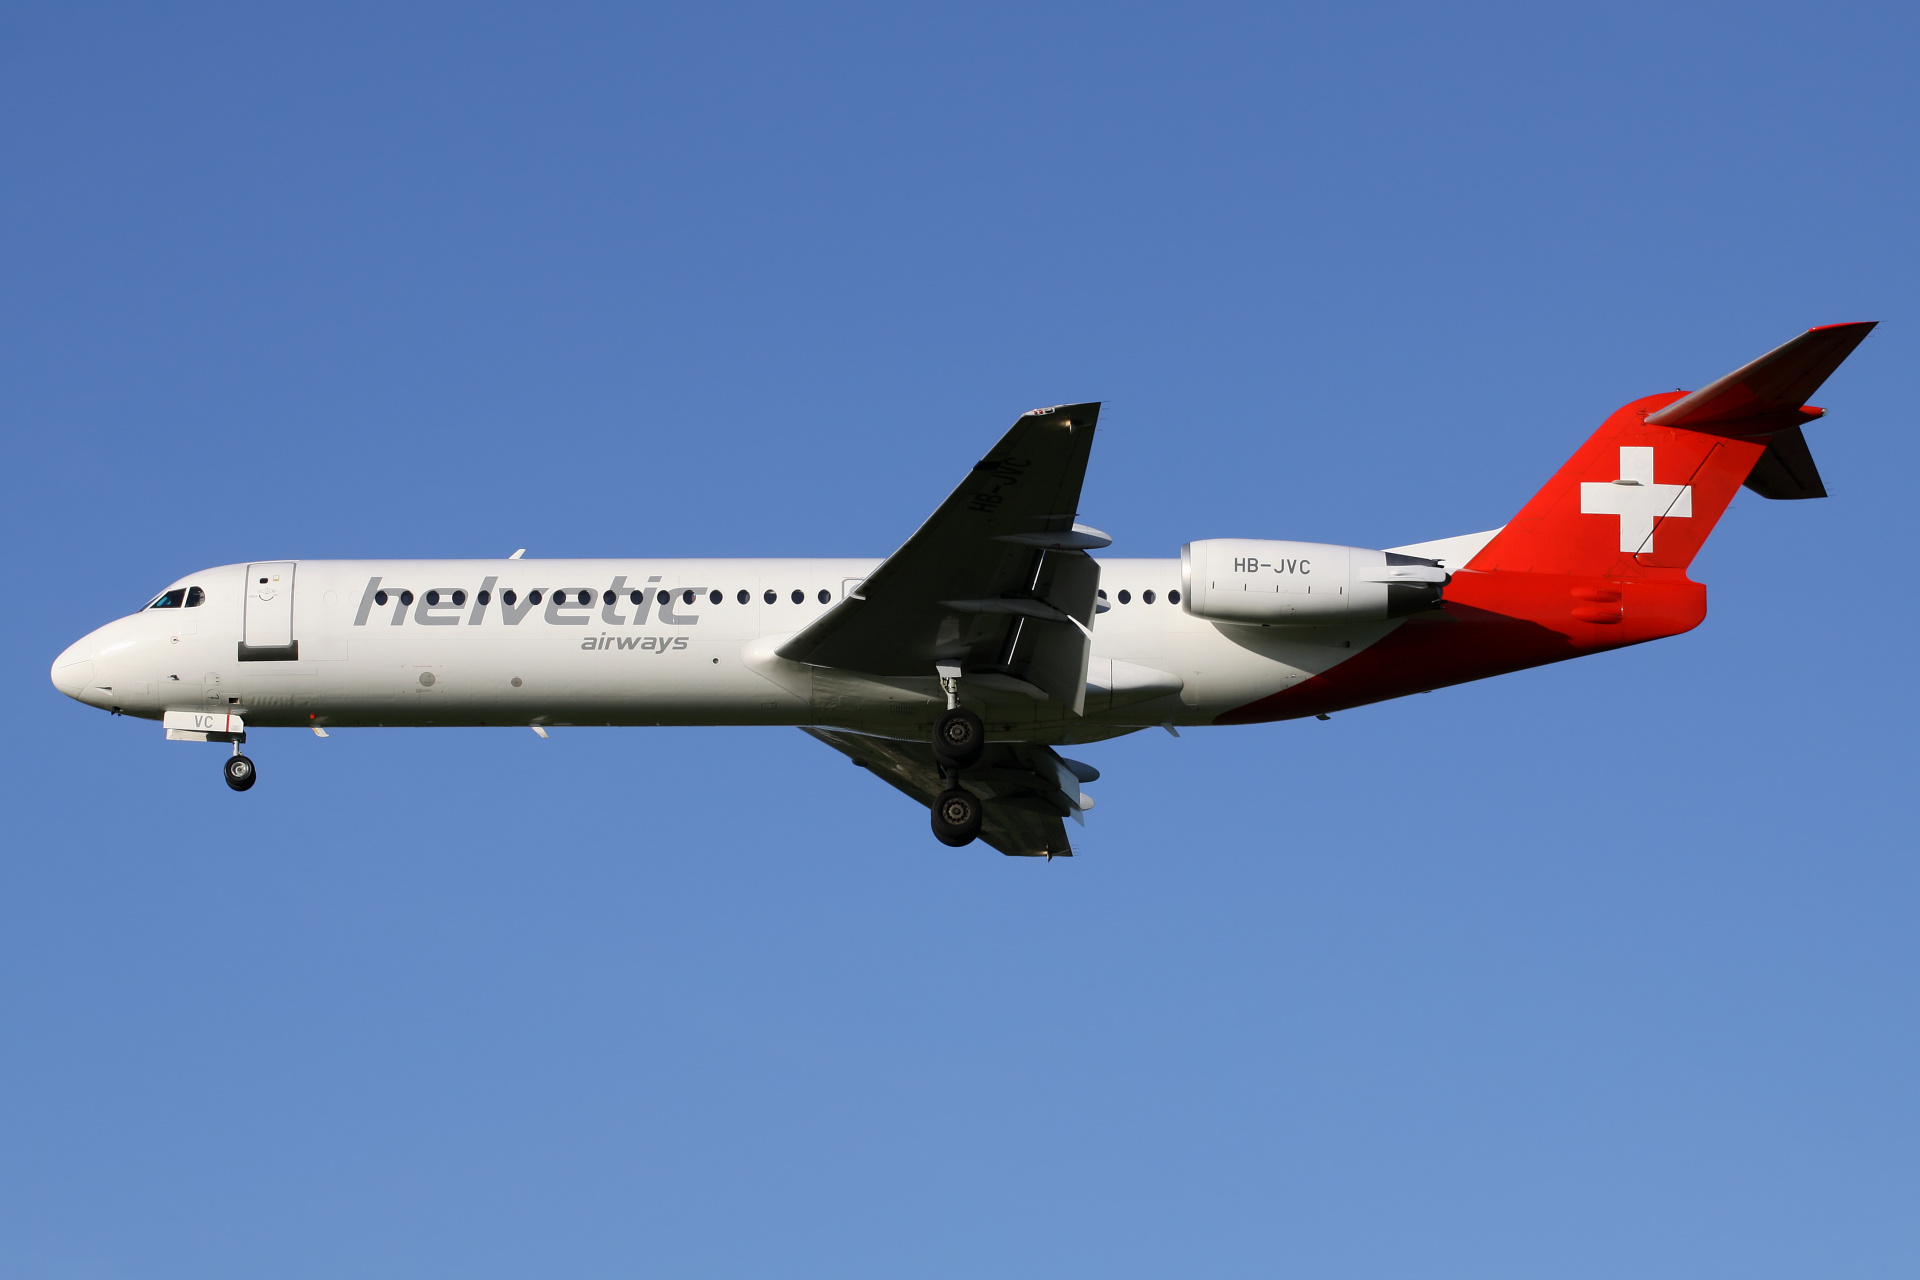 HB-JVC (Aircraft » EPWA Spotting » Fokker 100 » Helvetic Airways)